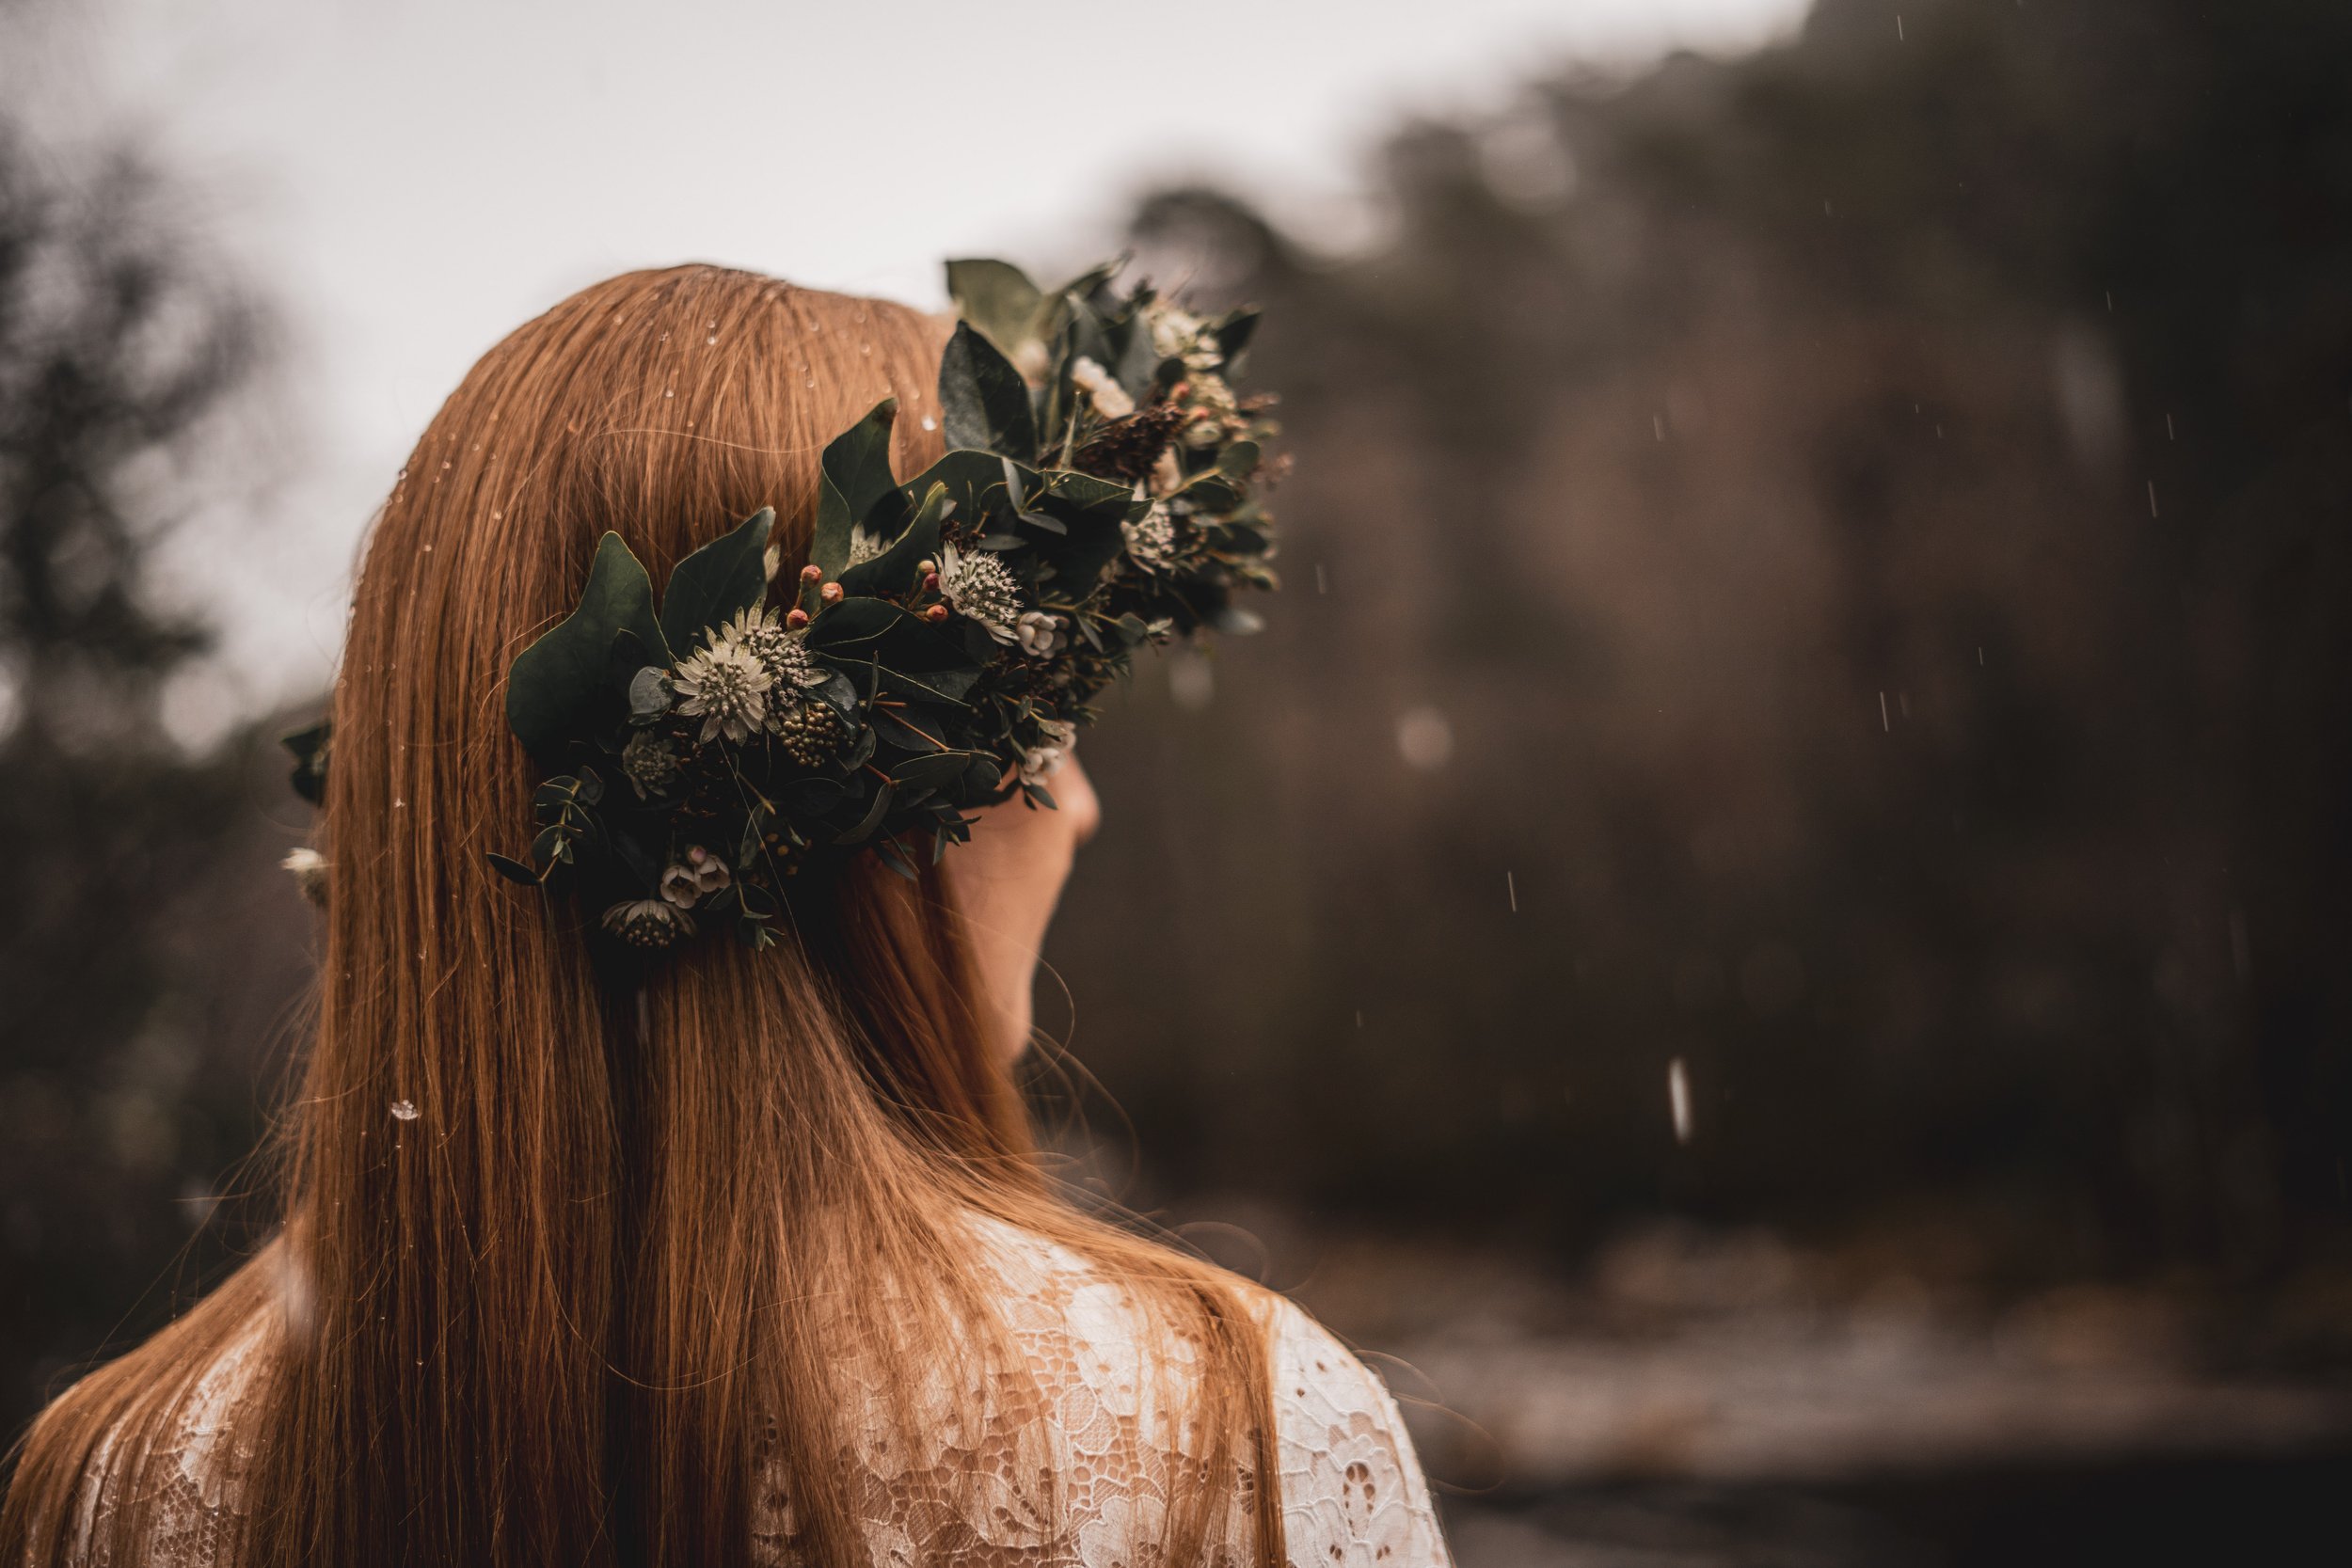 Bride wearing a flower crown